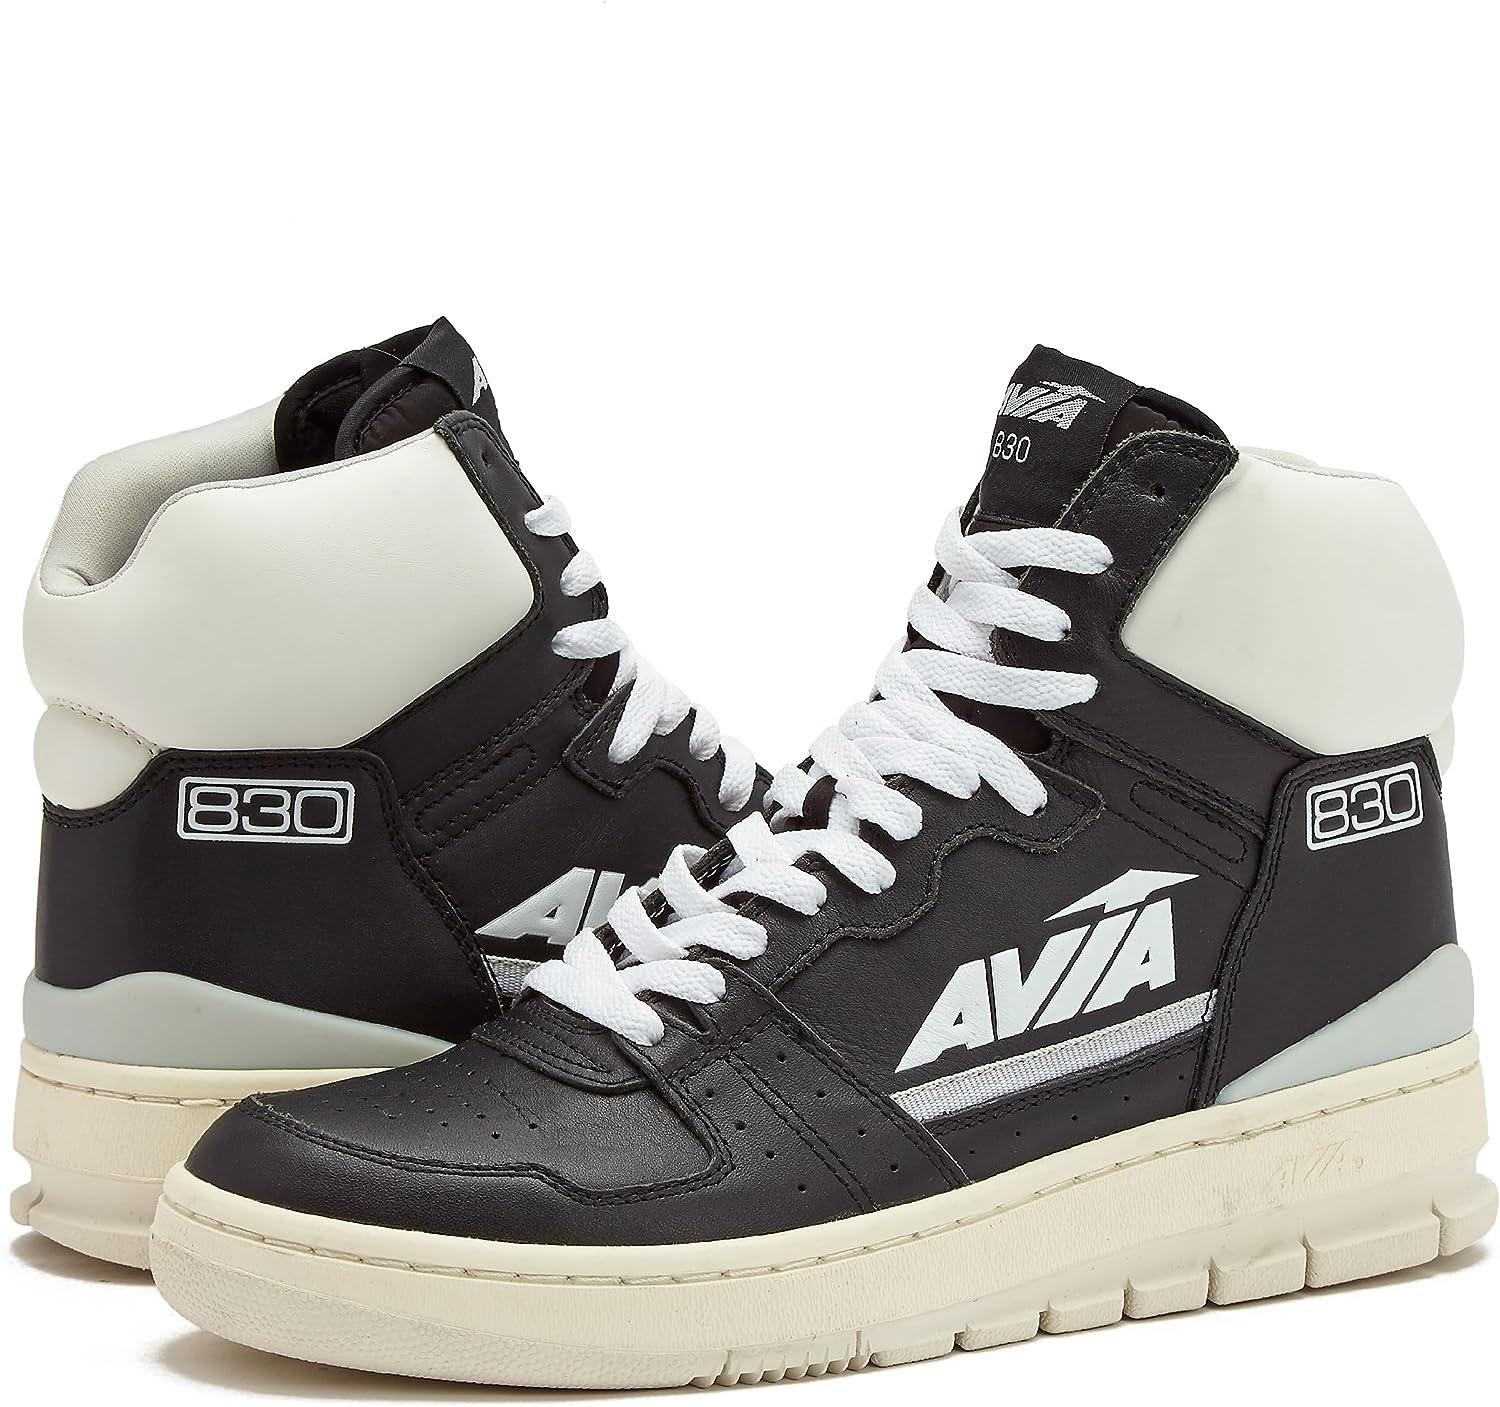 Avia 830 Men’s Basketball Shoes, Retro Sneakers for [...]